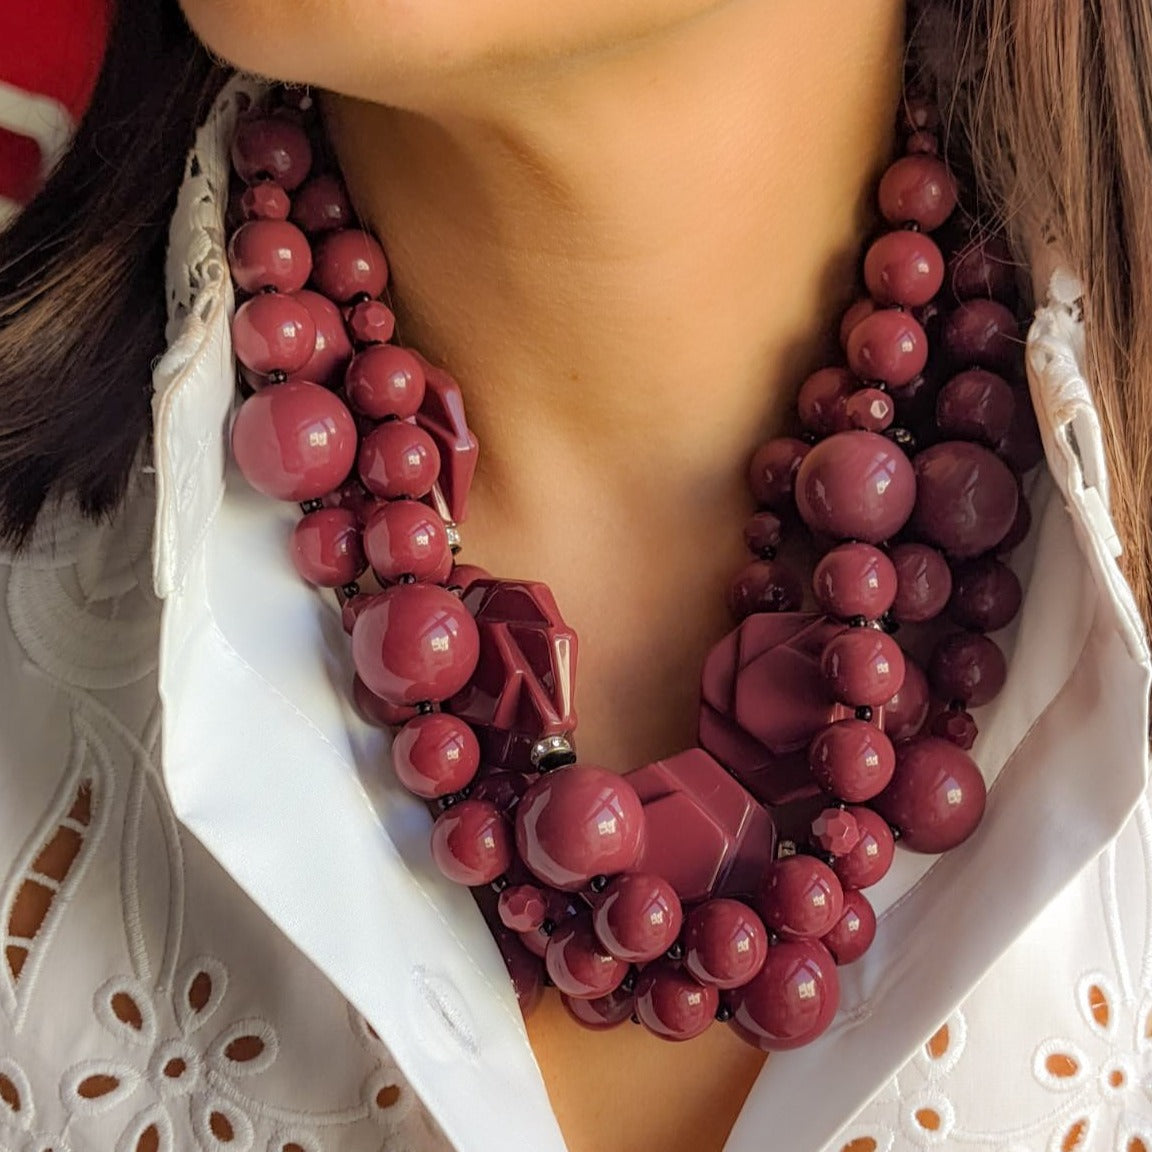 Vintage Angela Caputi plastic beaded necklace worn on woman’s neck